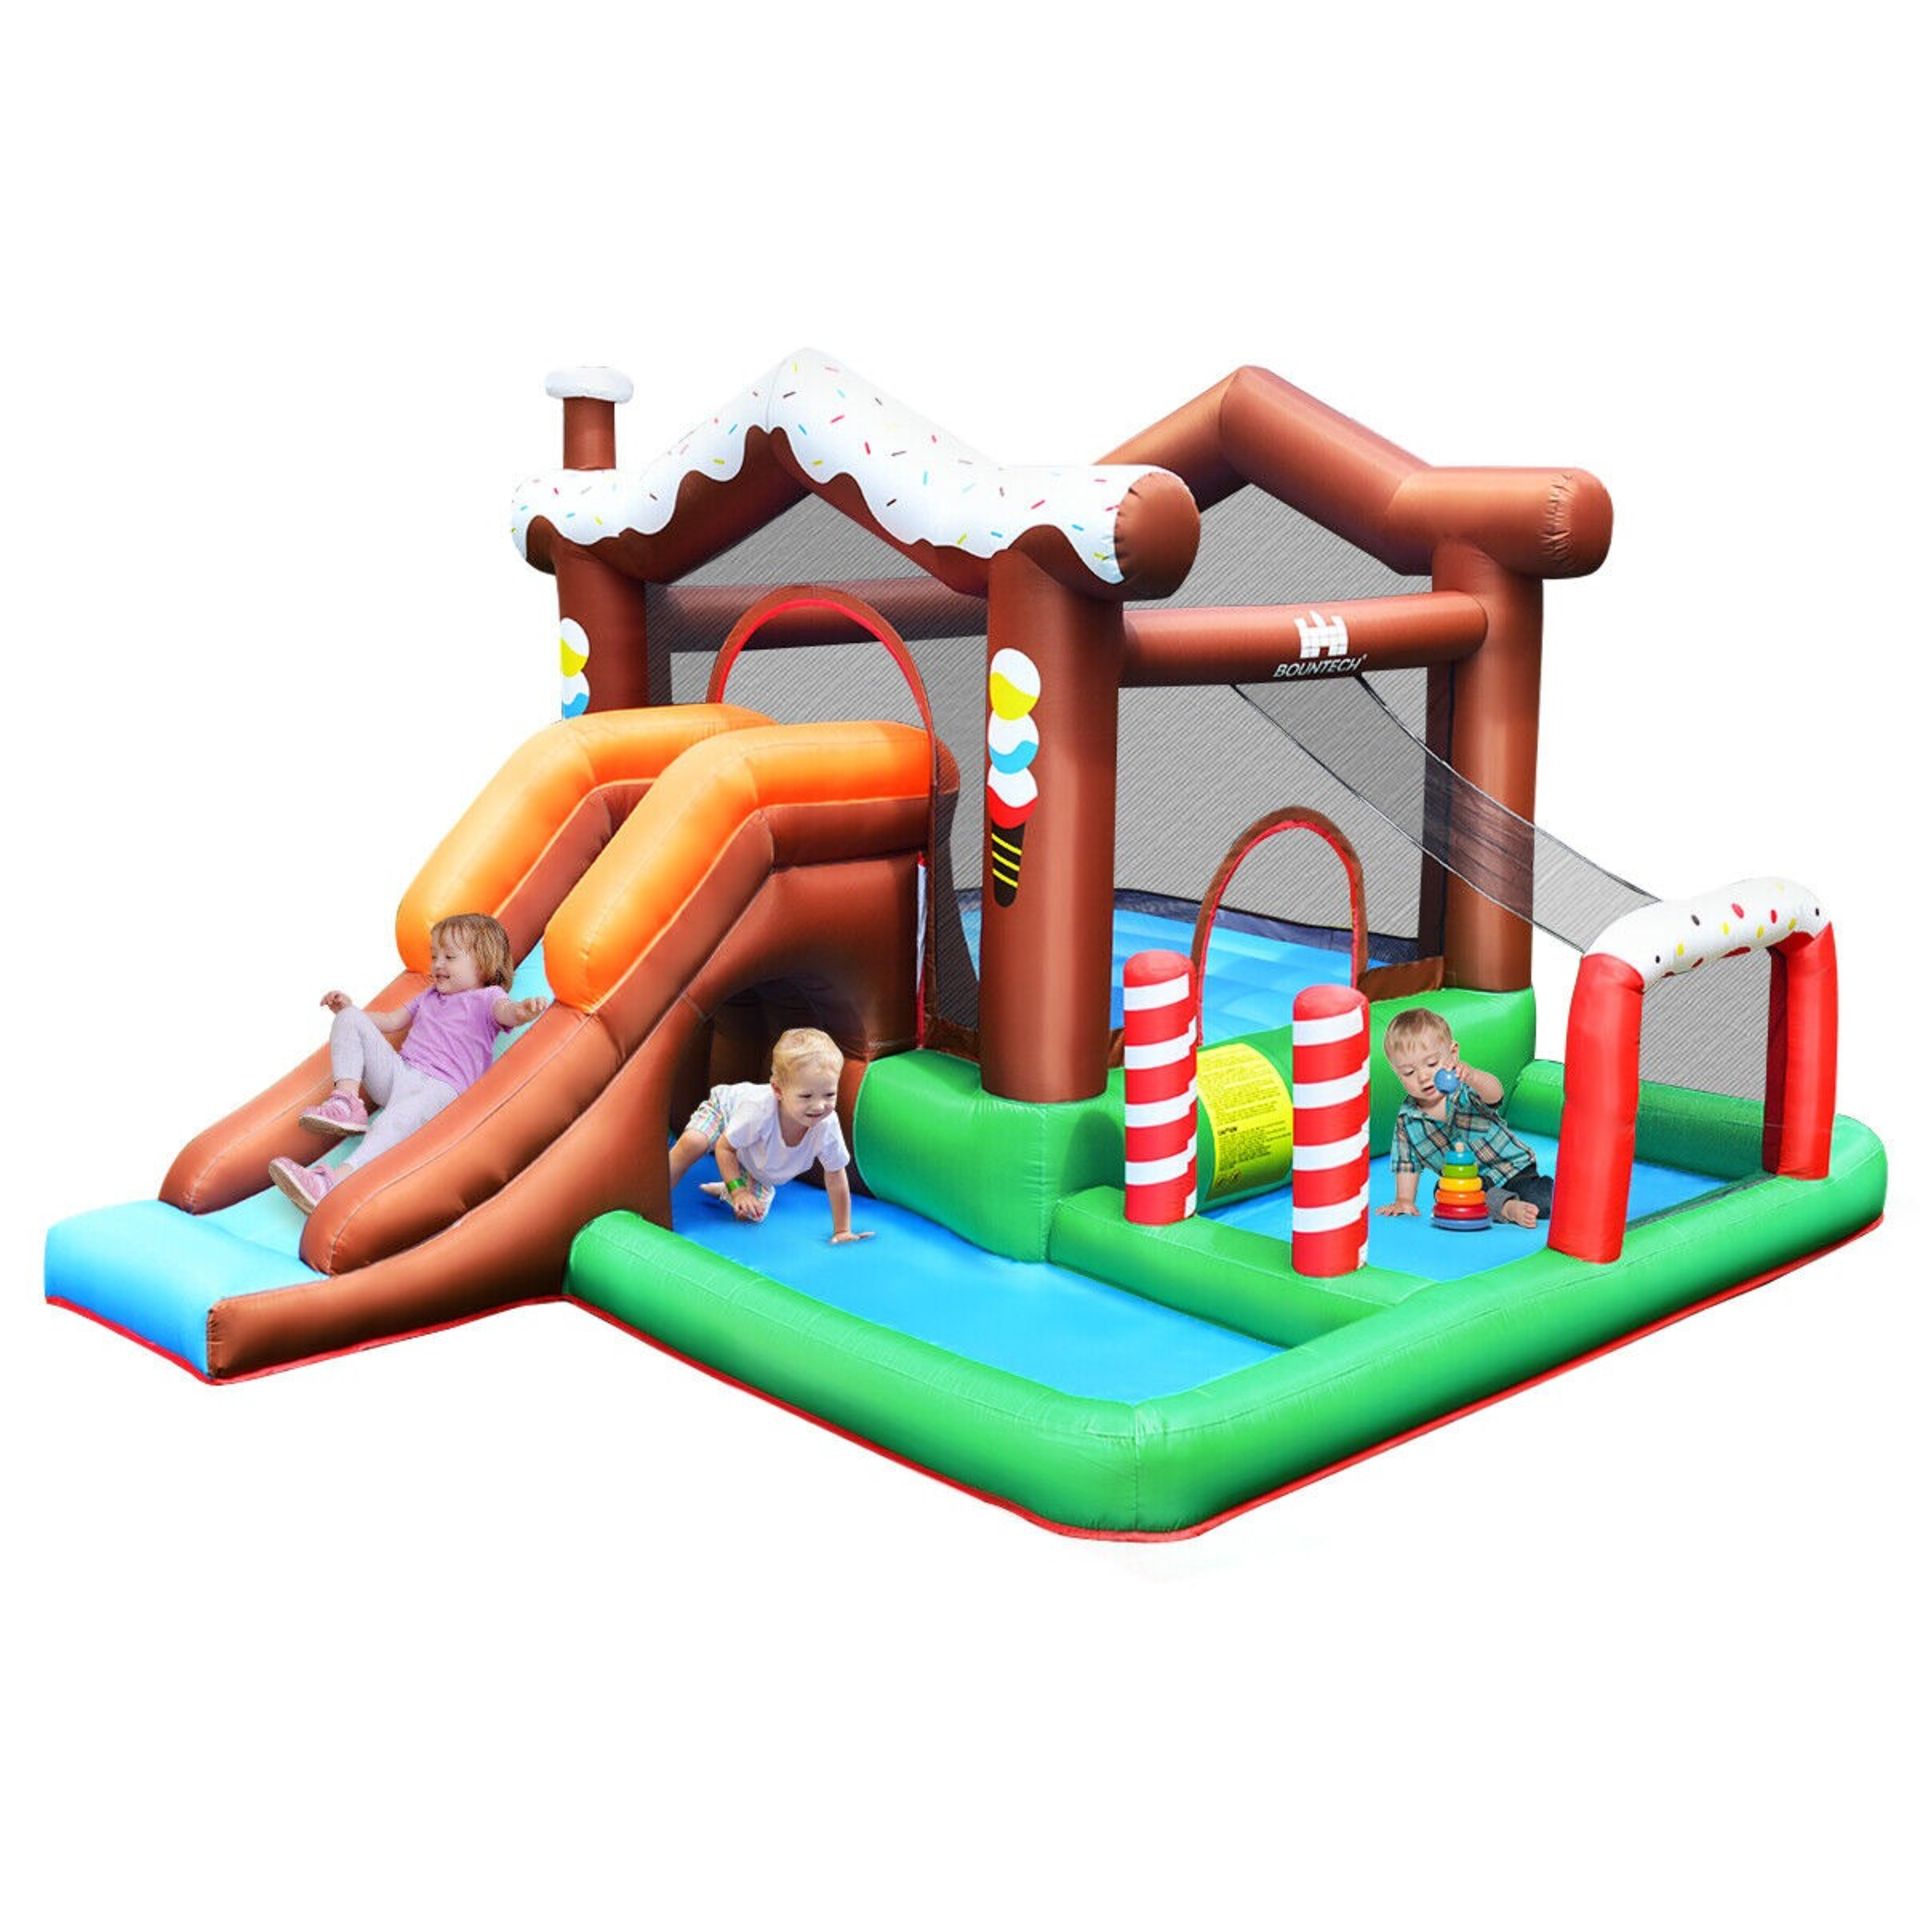 Kids Inflatable Bounce House Jumping Castle Slide Climber Bouncer - ER53